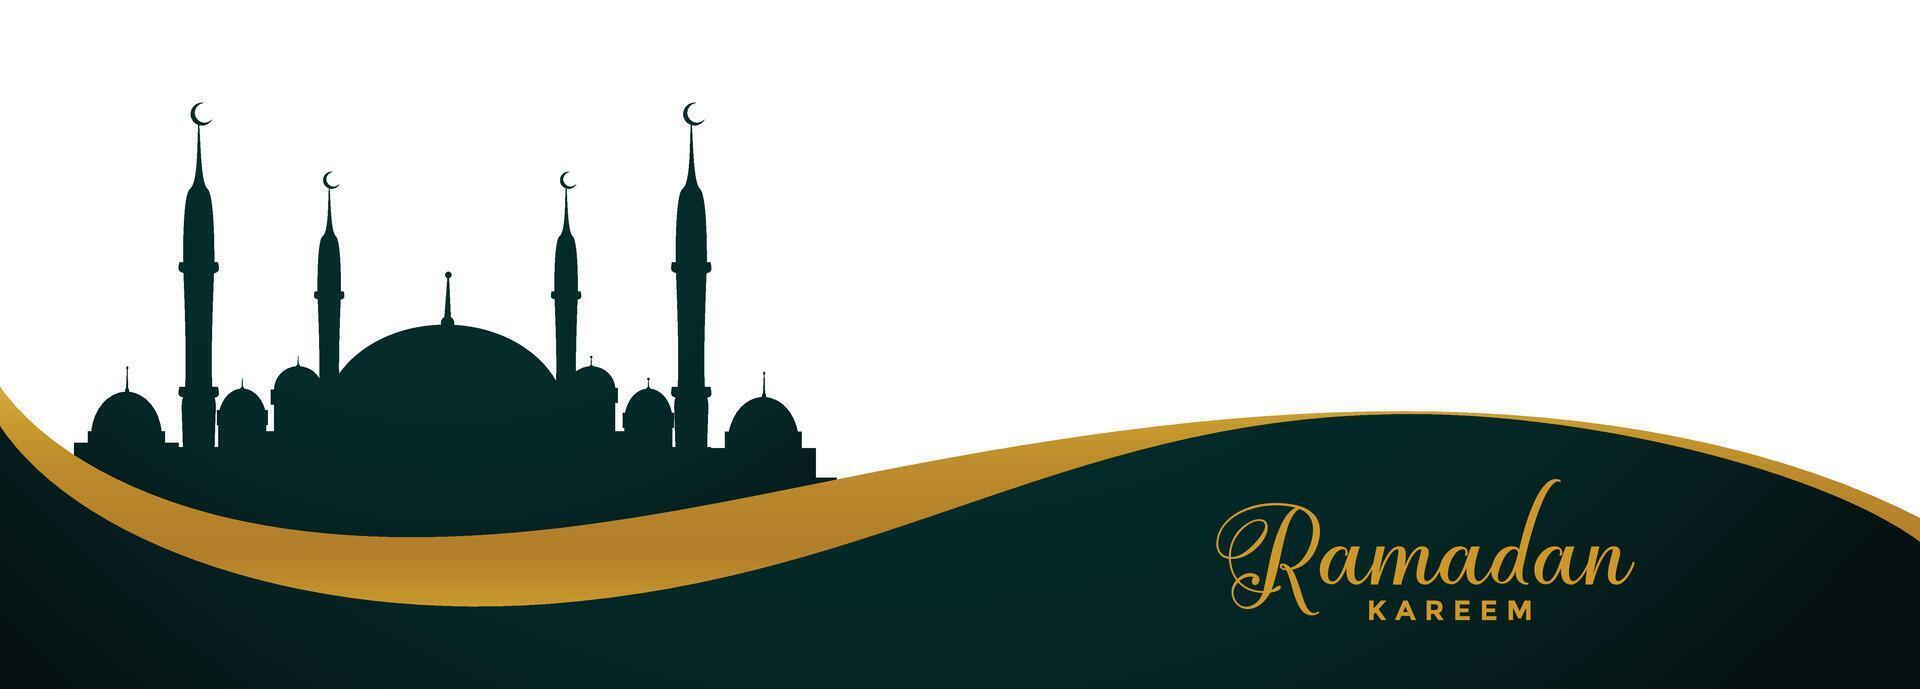 Ramadan kareem largo bandiera con moschea design vettore